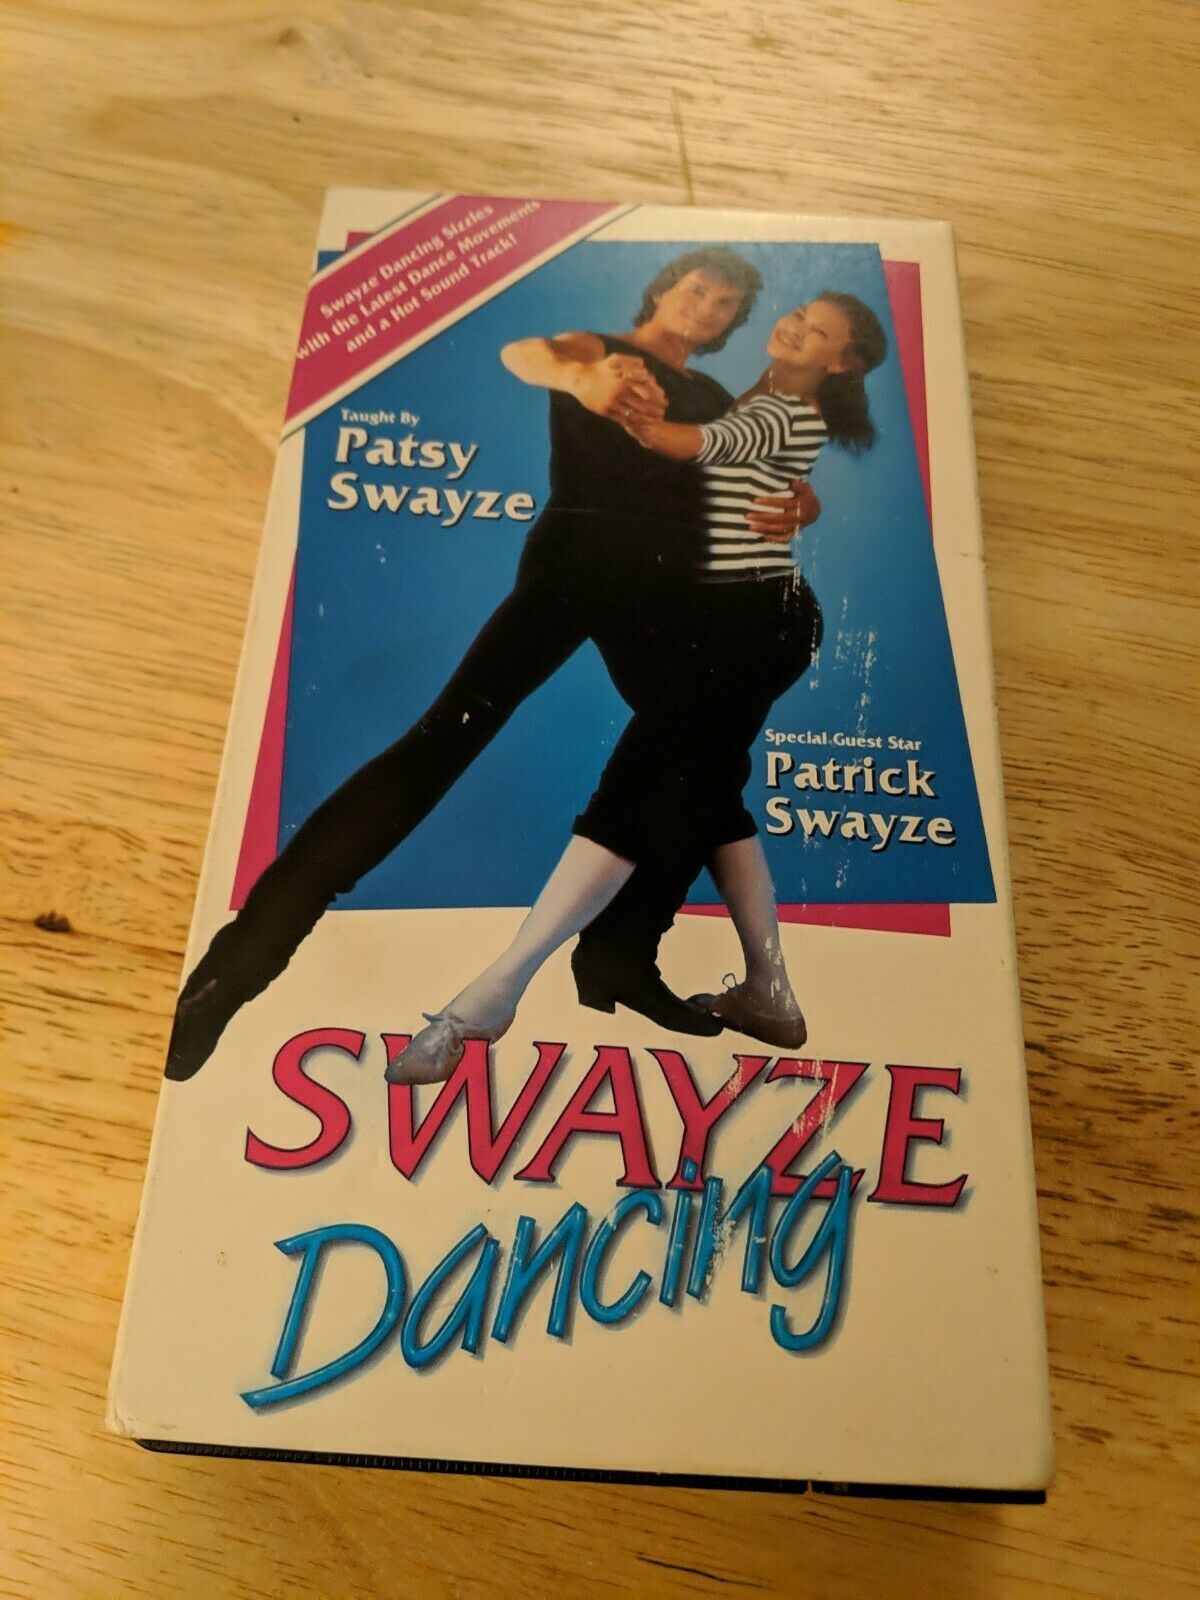 Swayze Dancing - Darkside Records